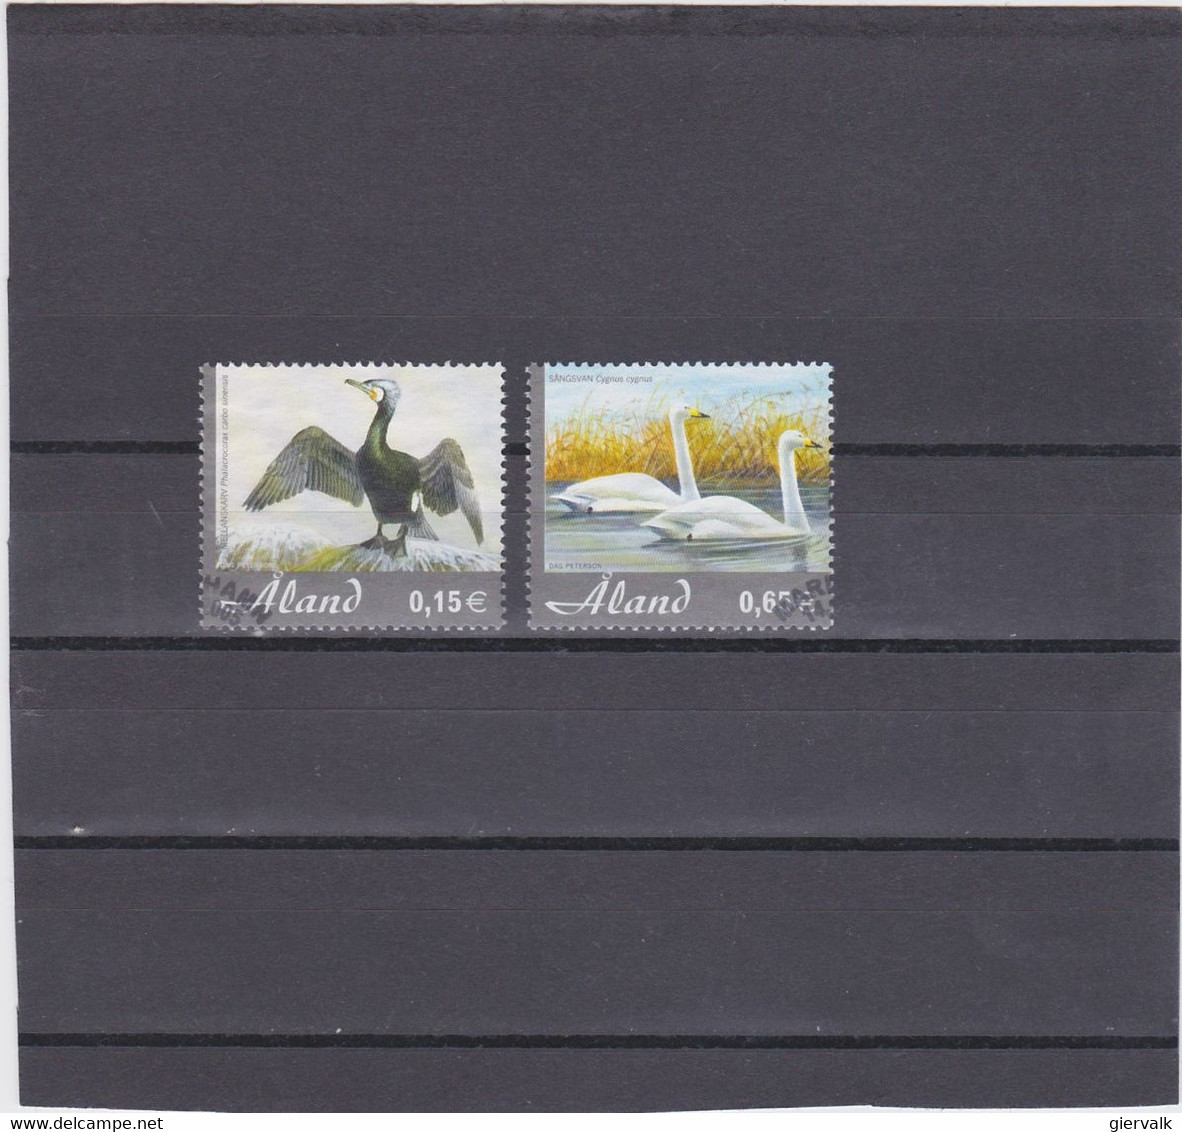 ALAND 1990 BIRDS CTO/USED. - Swans